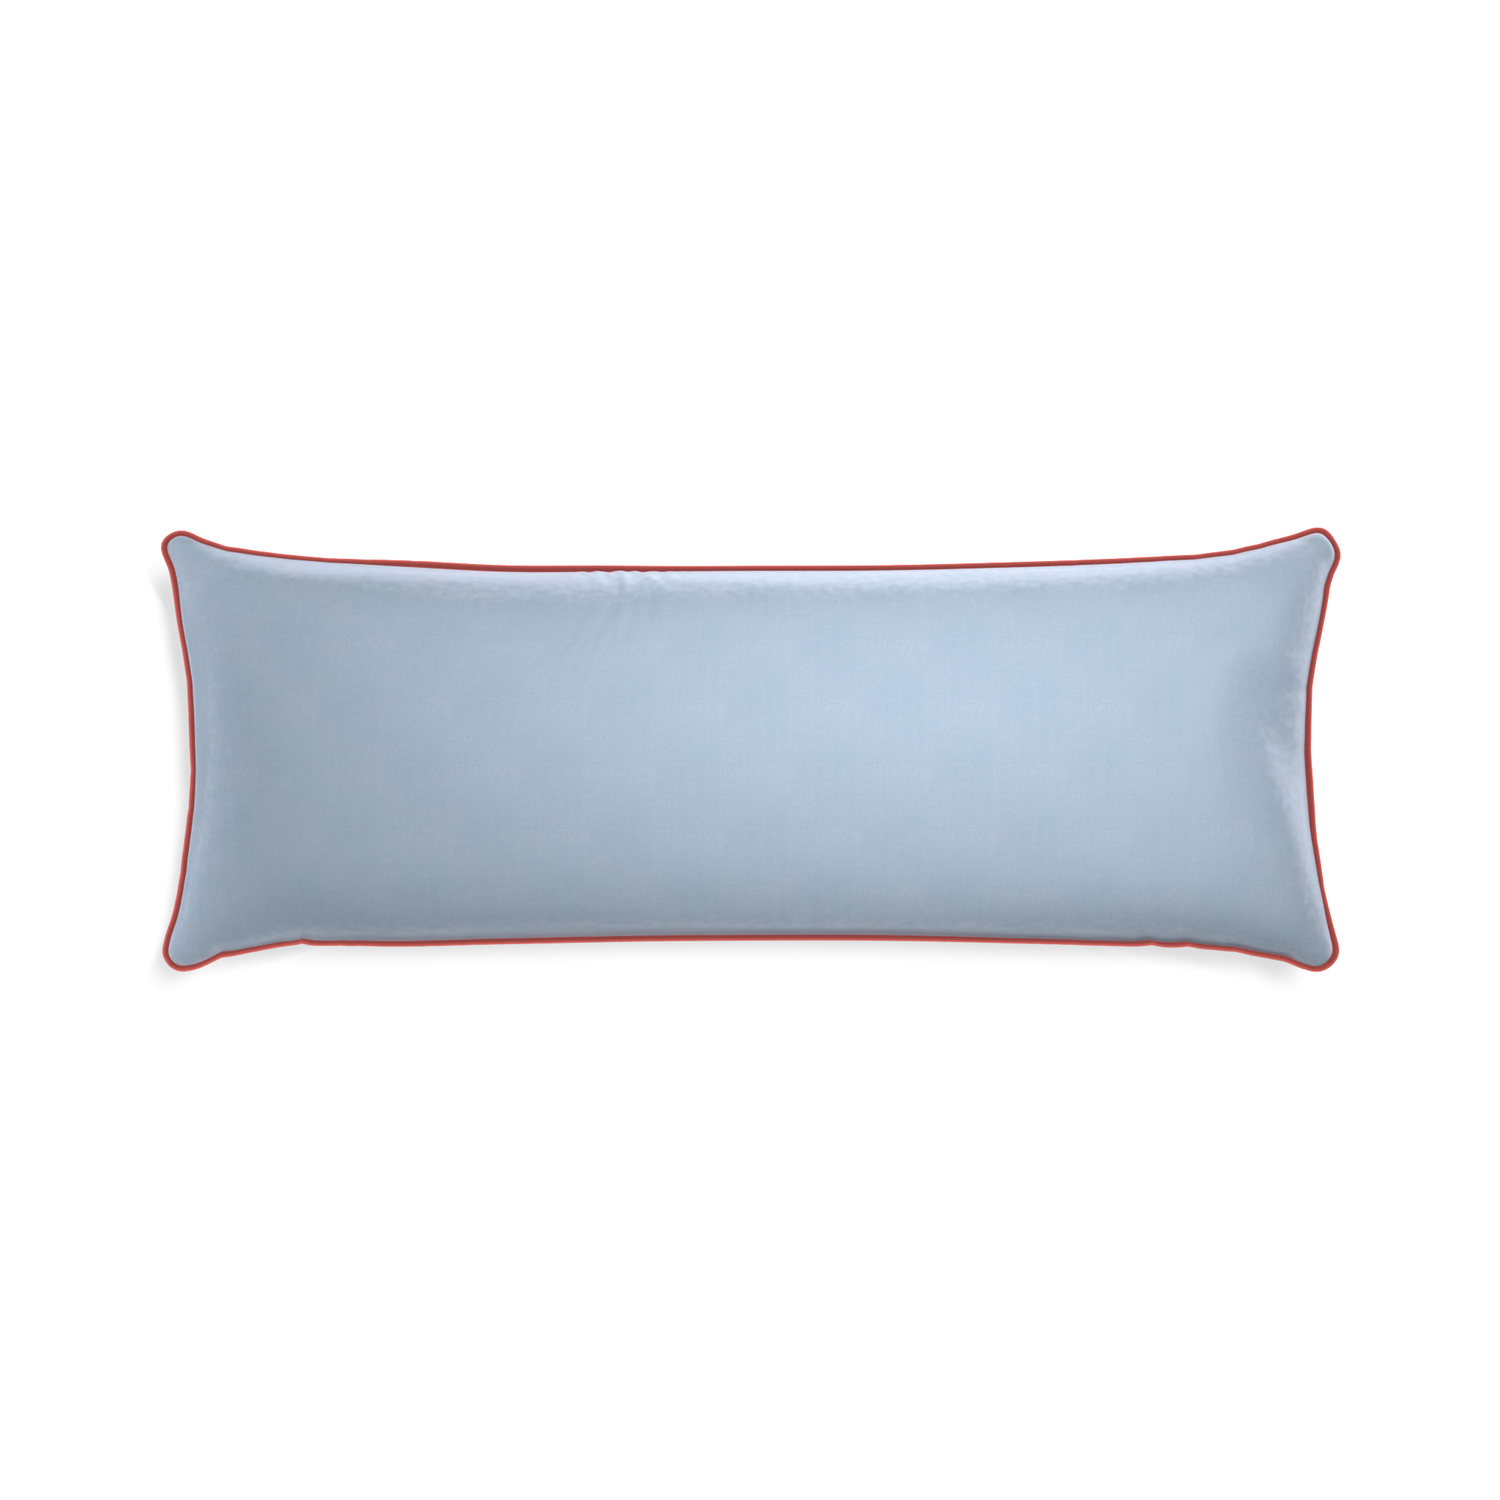 Xl-lumbar sky velvet custom pillow with c piping on white background